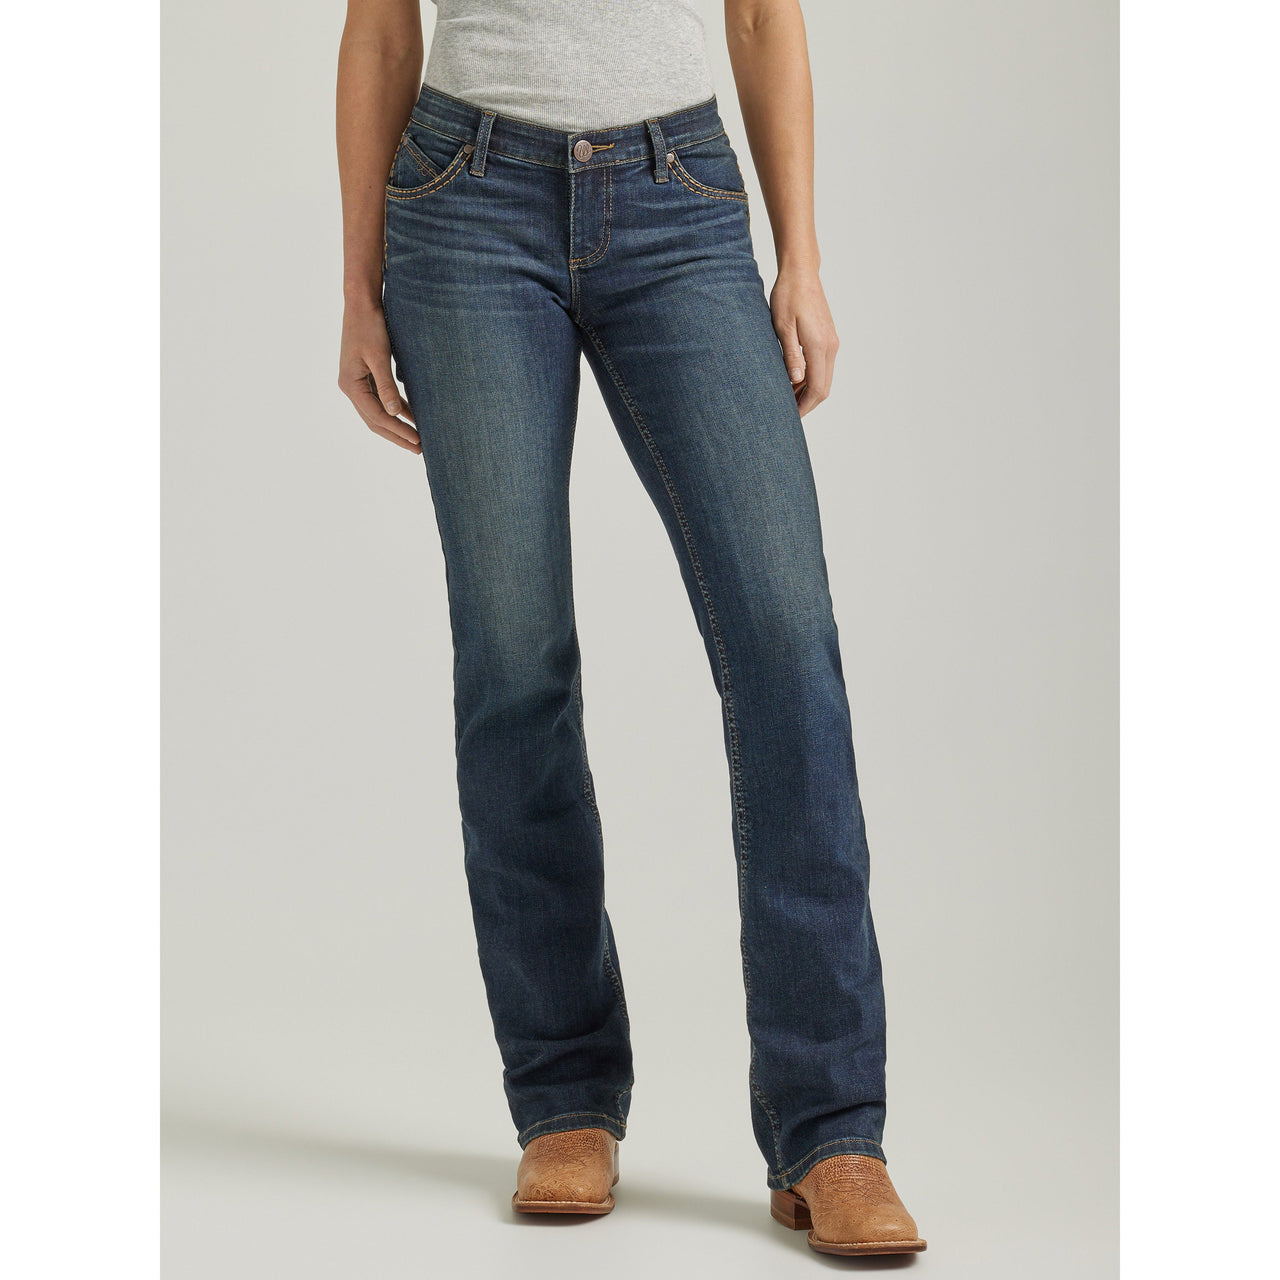 Wrangler Women's Ultimate Riding Shiloh Low Rise Bootcut Jeans - Della